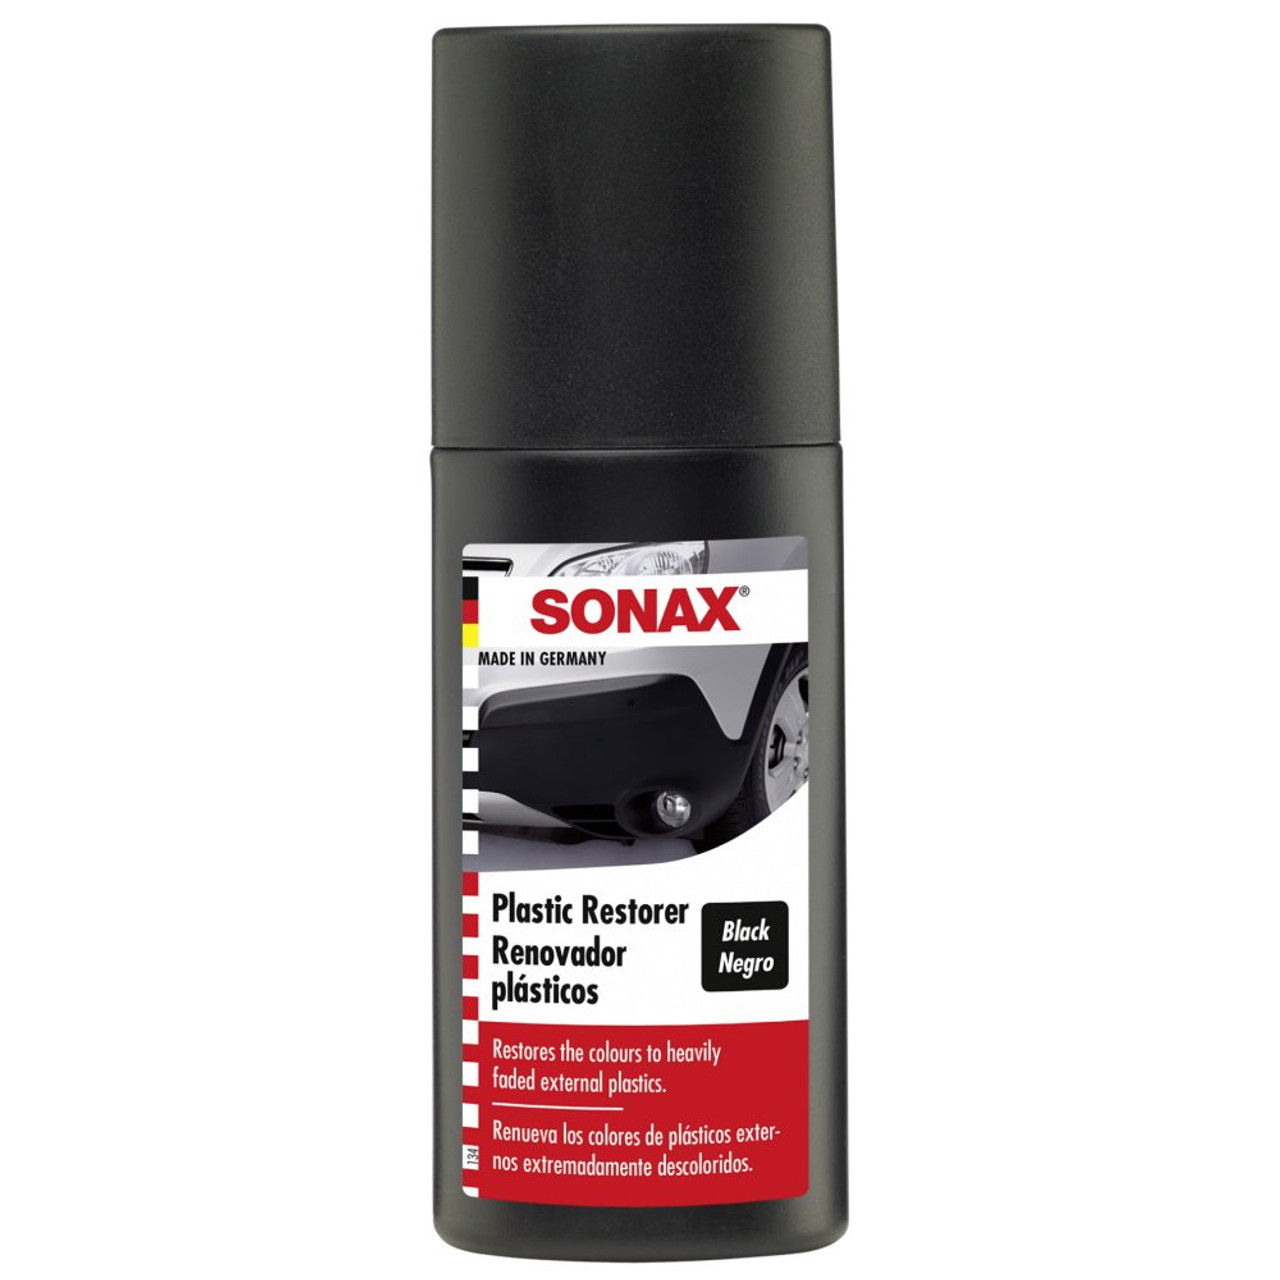 SONAX Plastic restorer black 100ml - Sonax Detailing Academy UK